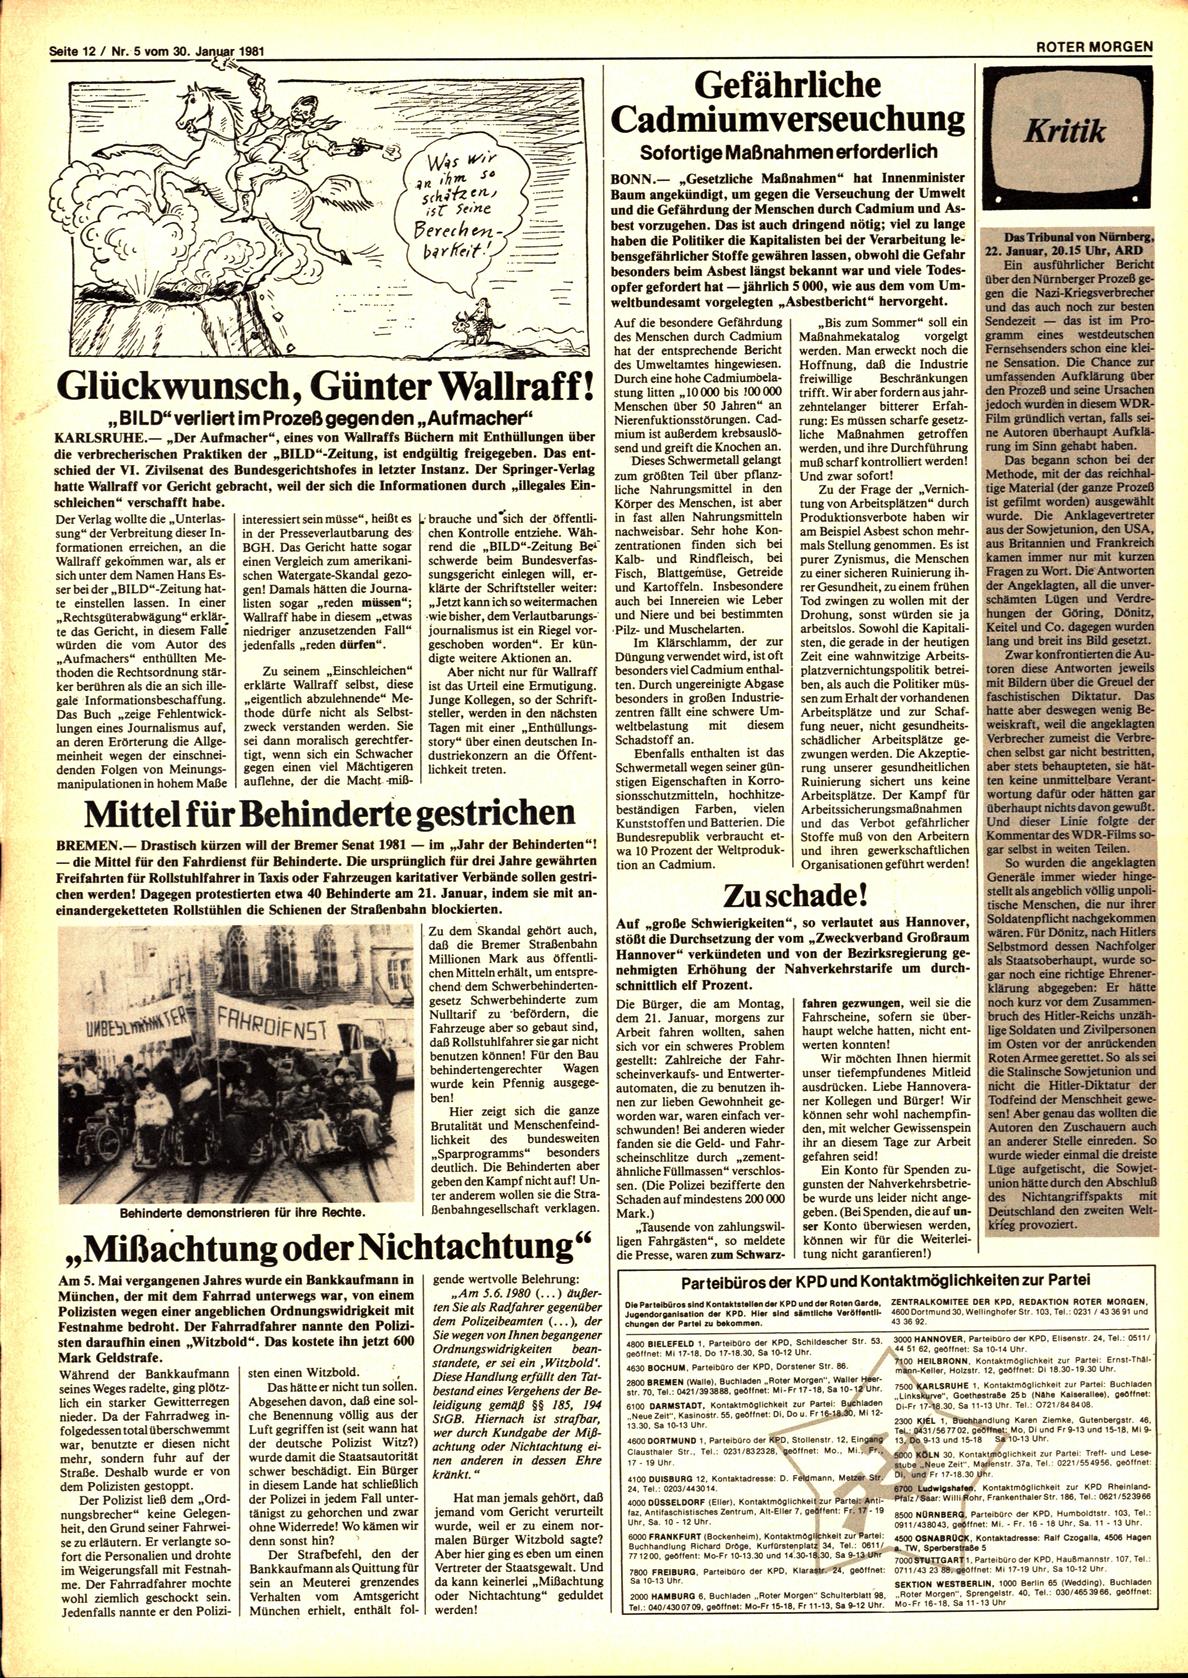 Roter Morgen, 15. Jg., 30. Januar 1981, Nr. 5, Seite 12